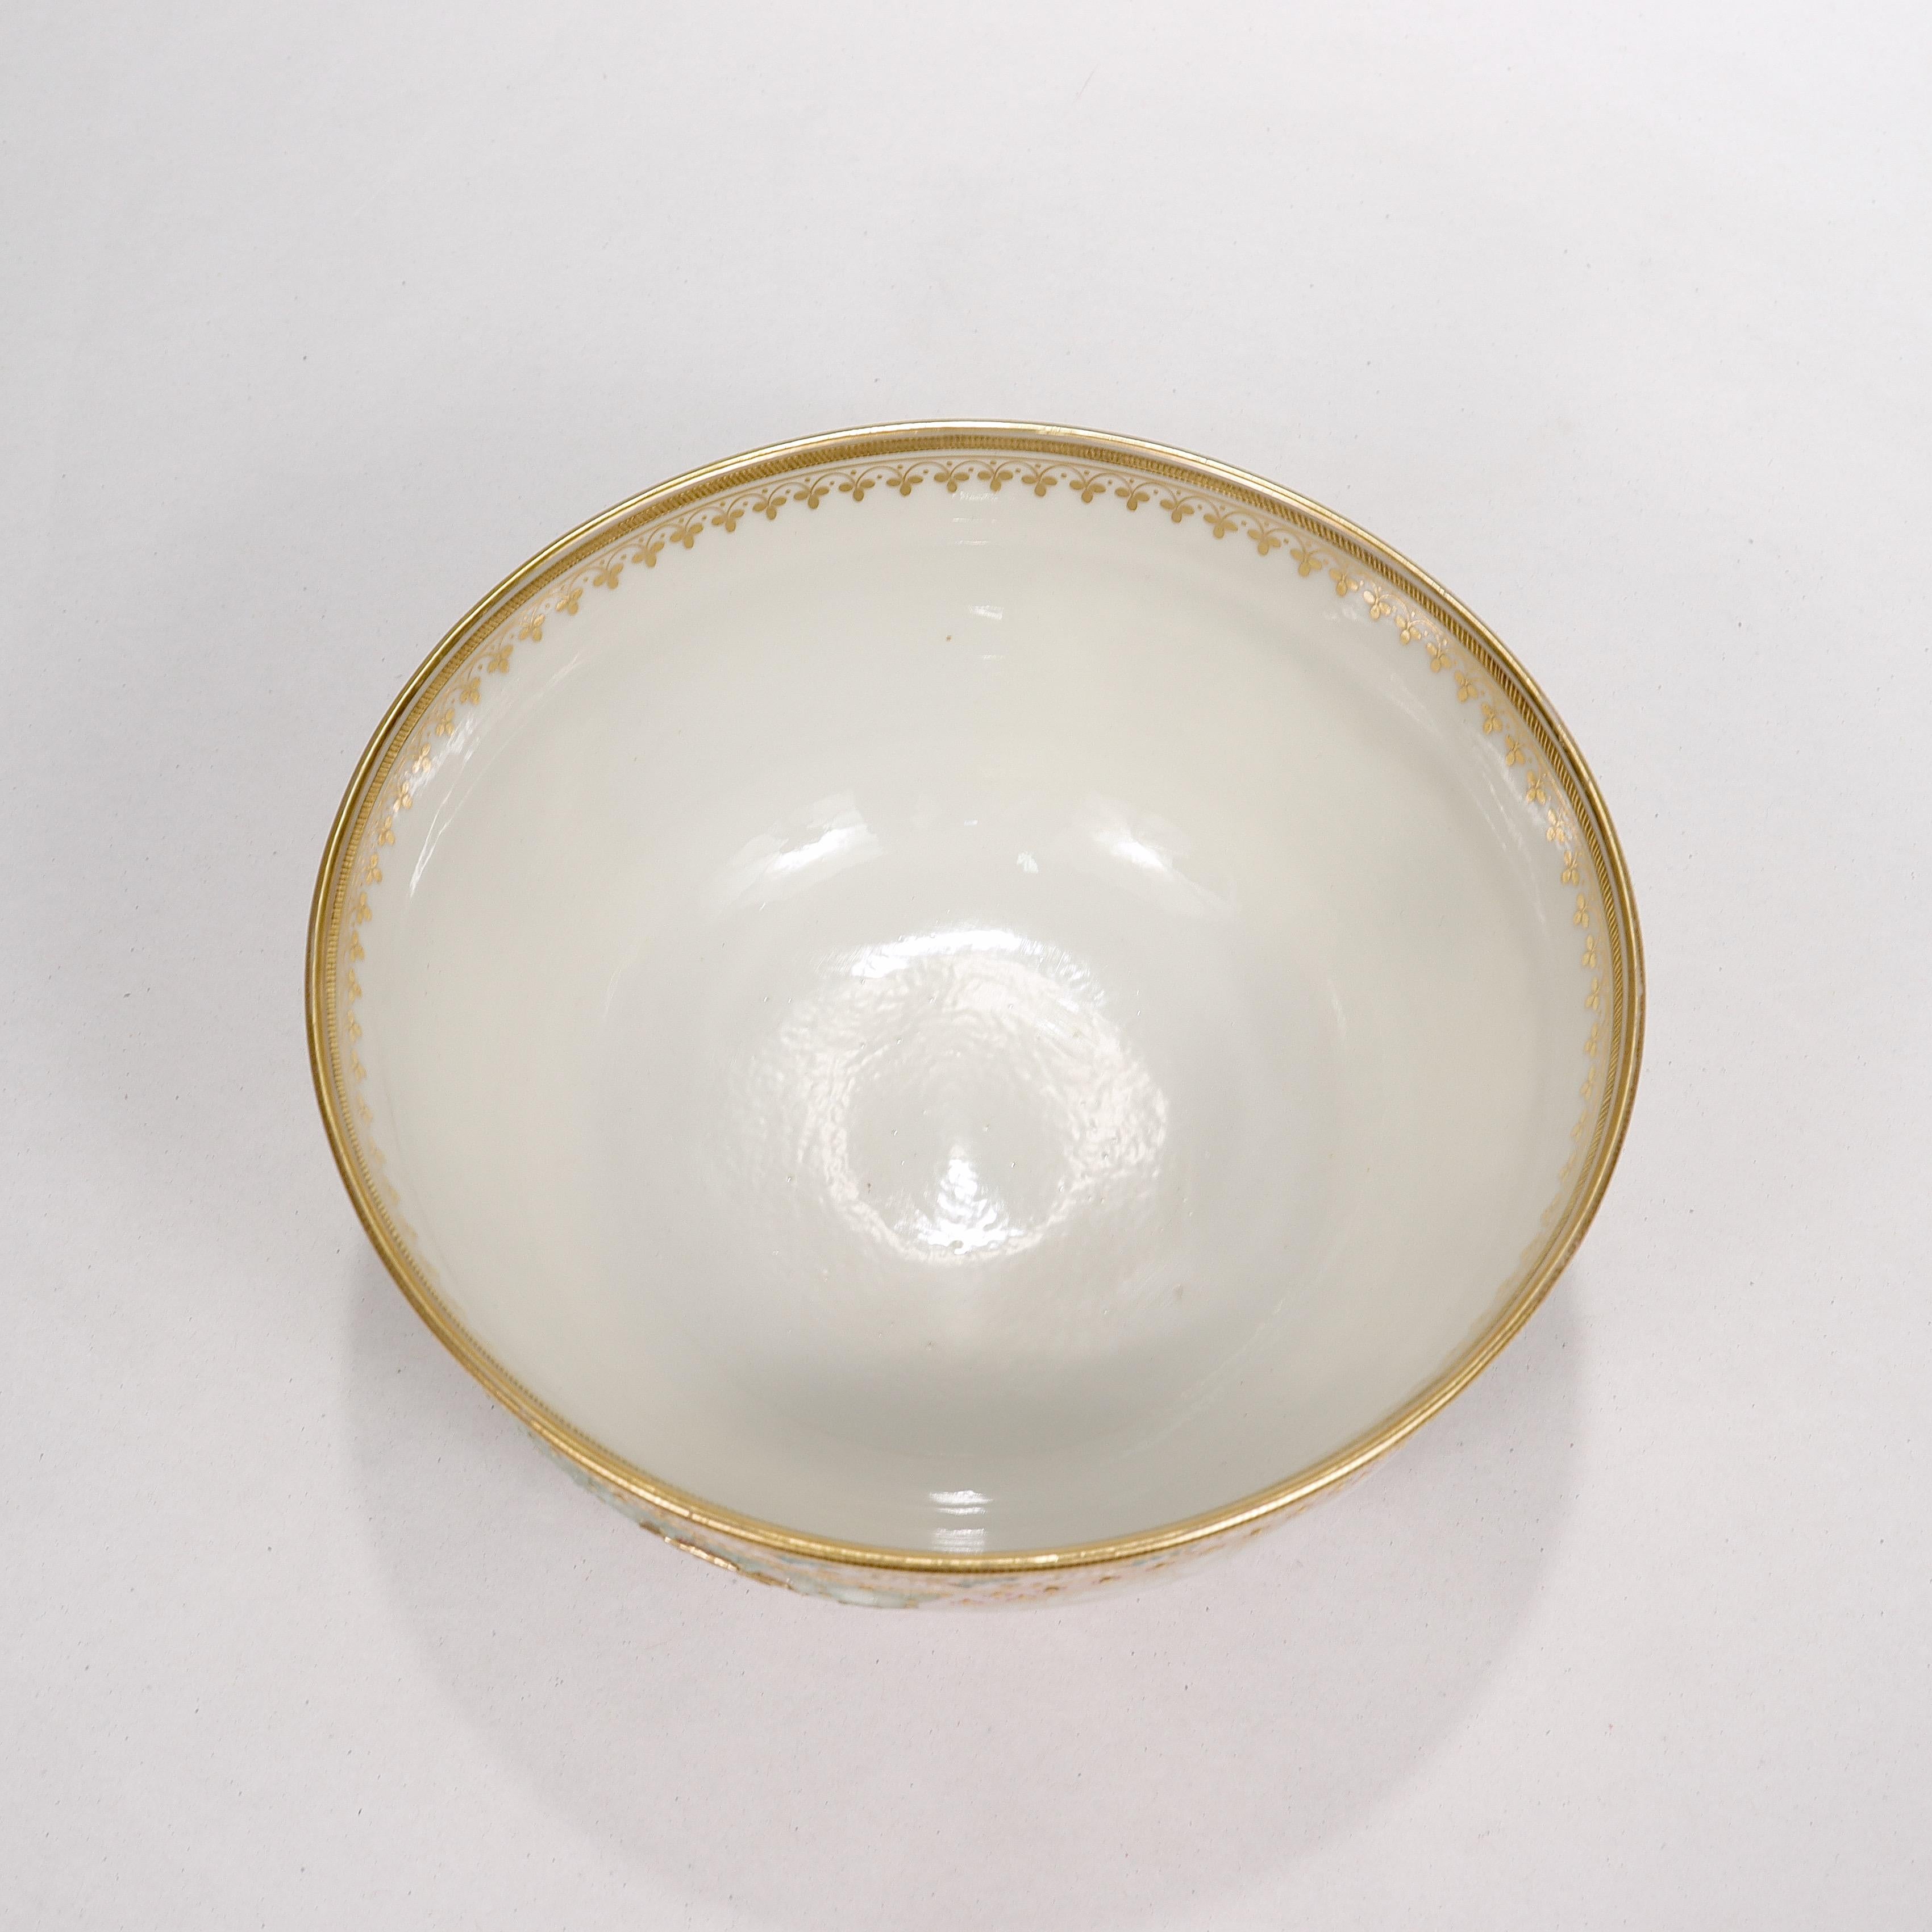 Reticulated Royal Worcester Porcelain Bowl Attr. to George Owen & Samuel Ranford For Sale 2